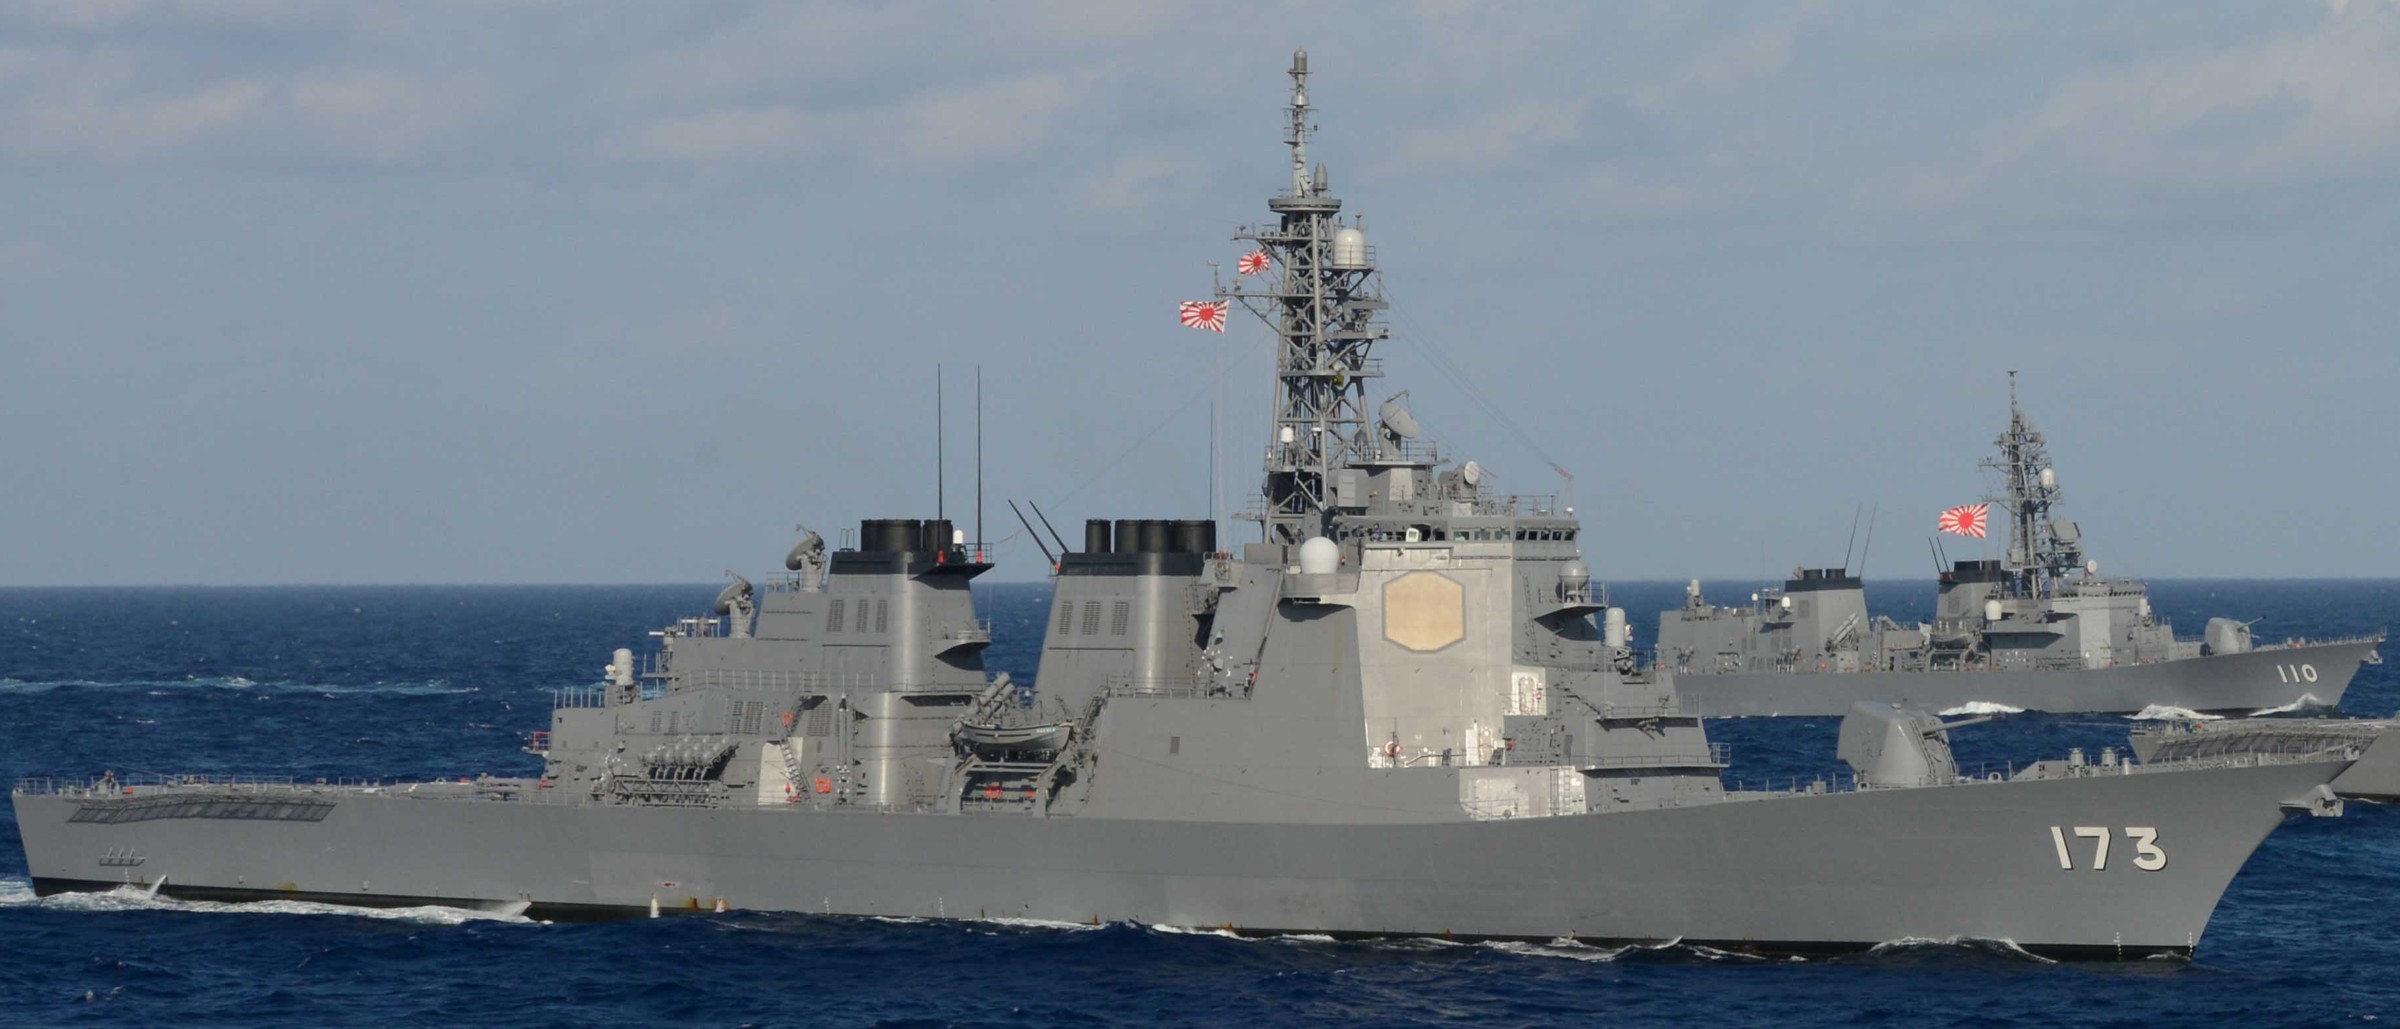 ddg-173 js kongo class guided missile destroyer aegis japan maritime self defense force jmsdf 21